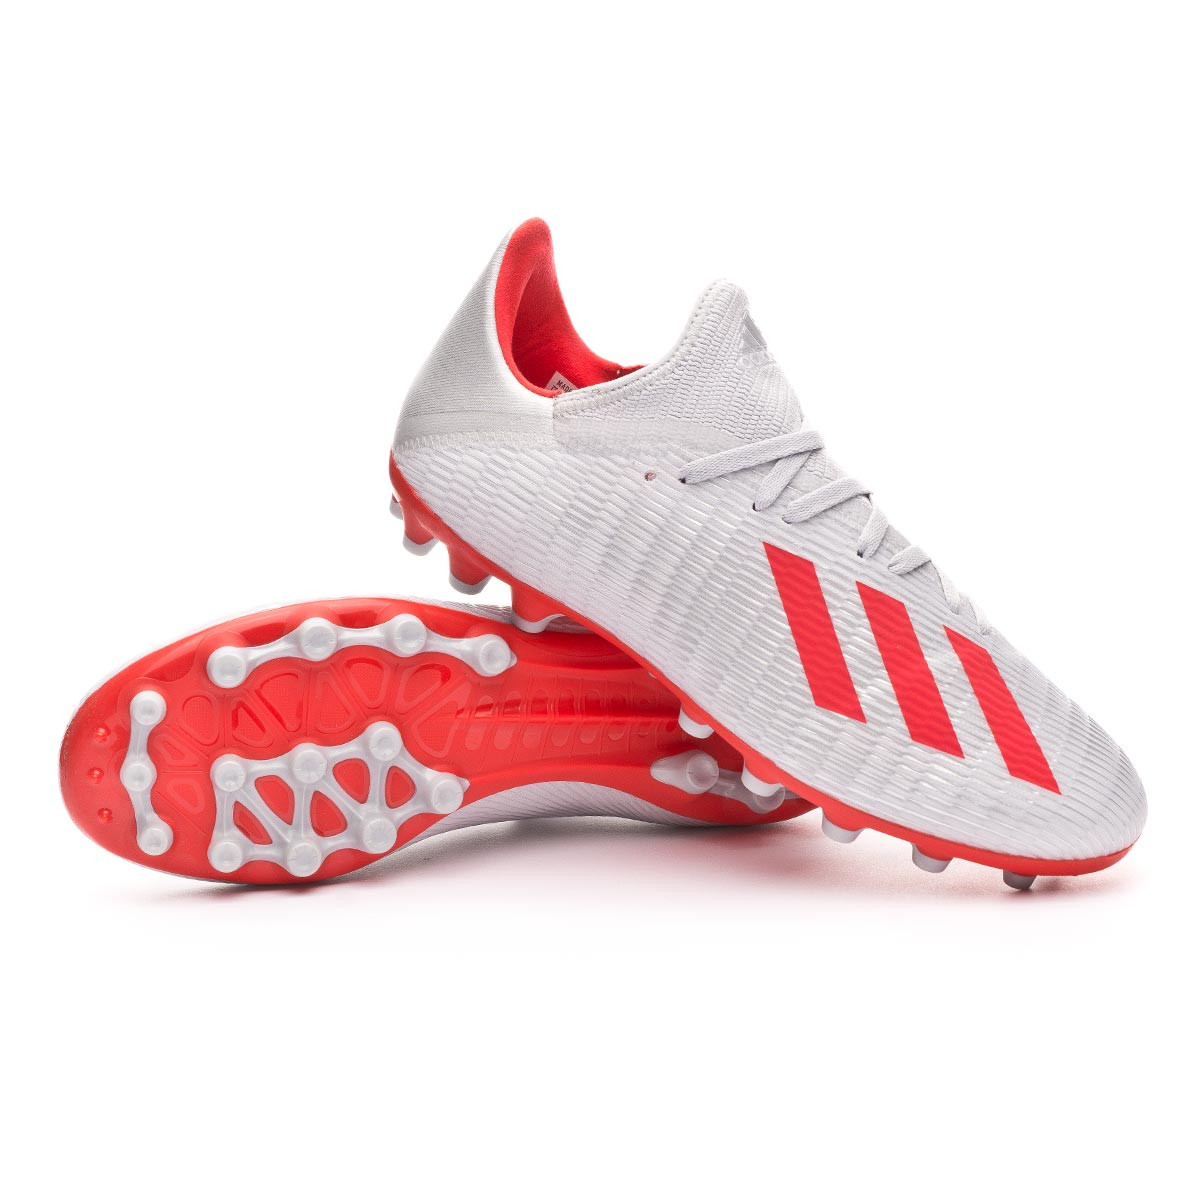 adidas football shoes 19.3